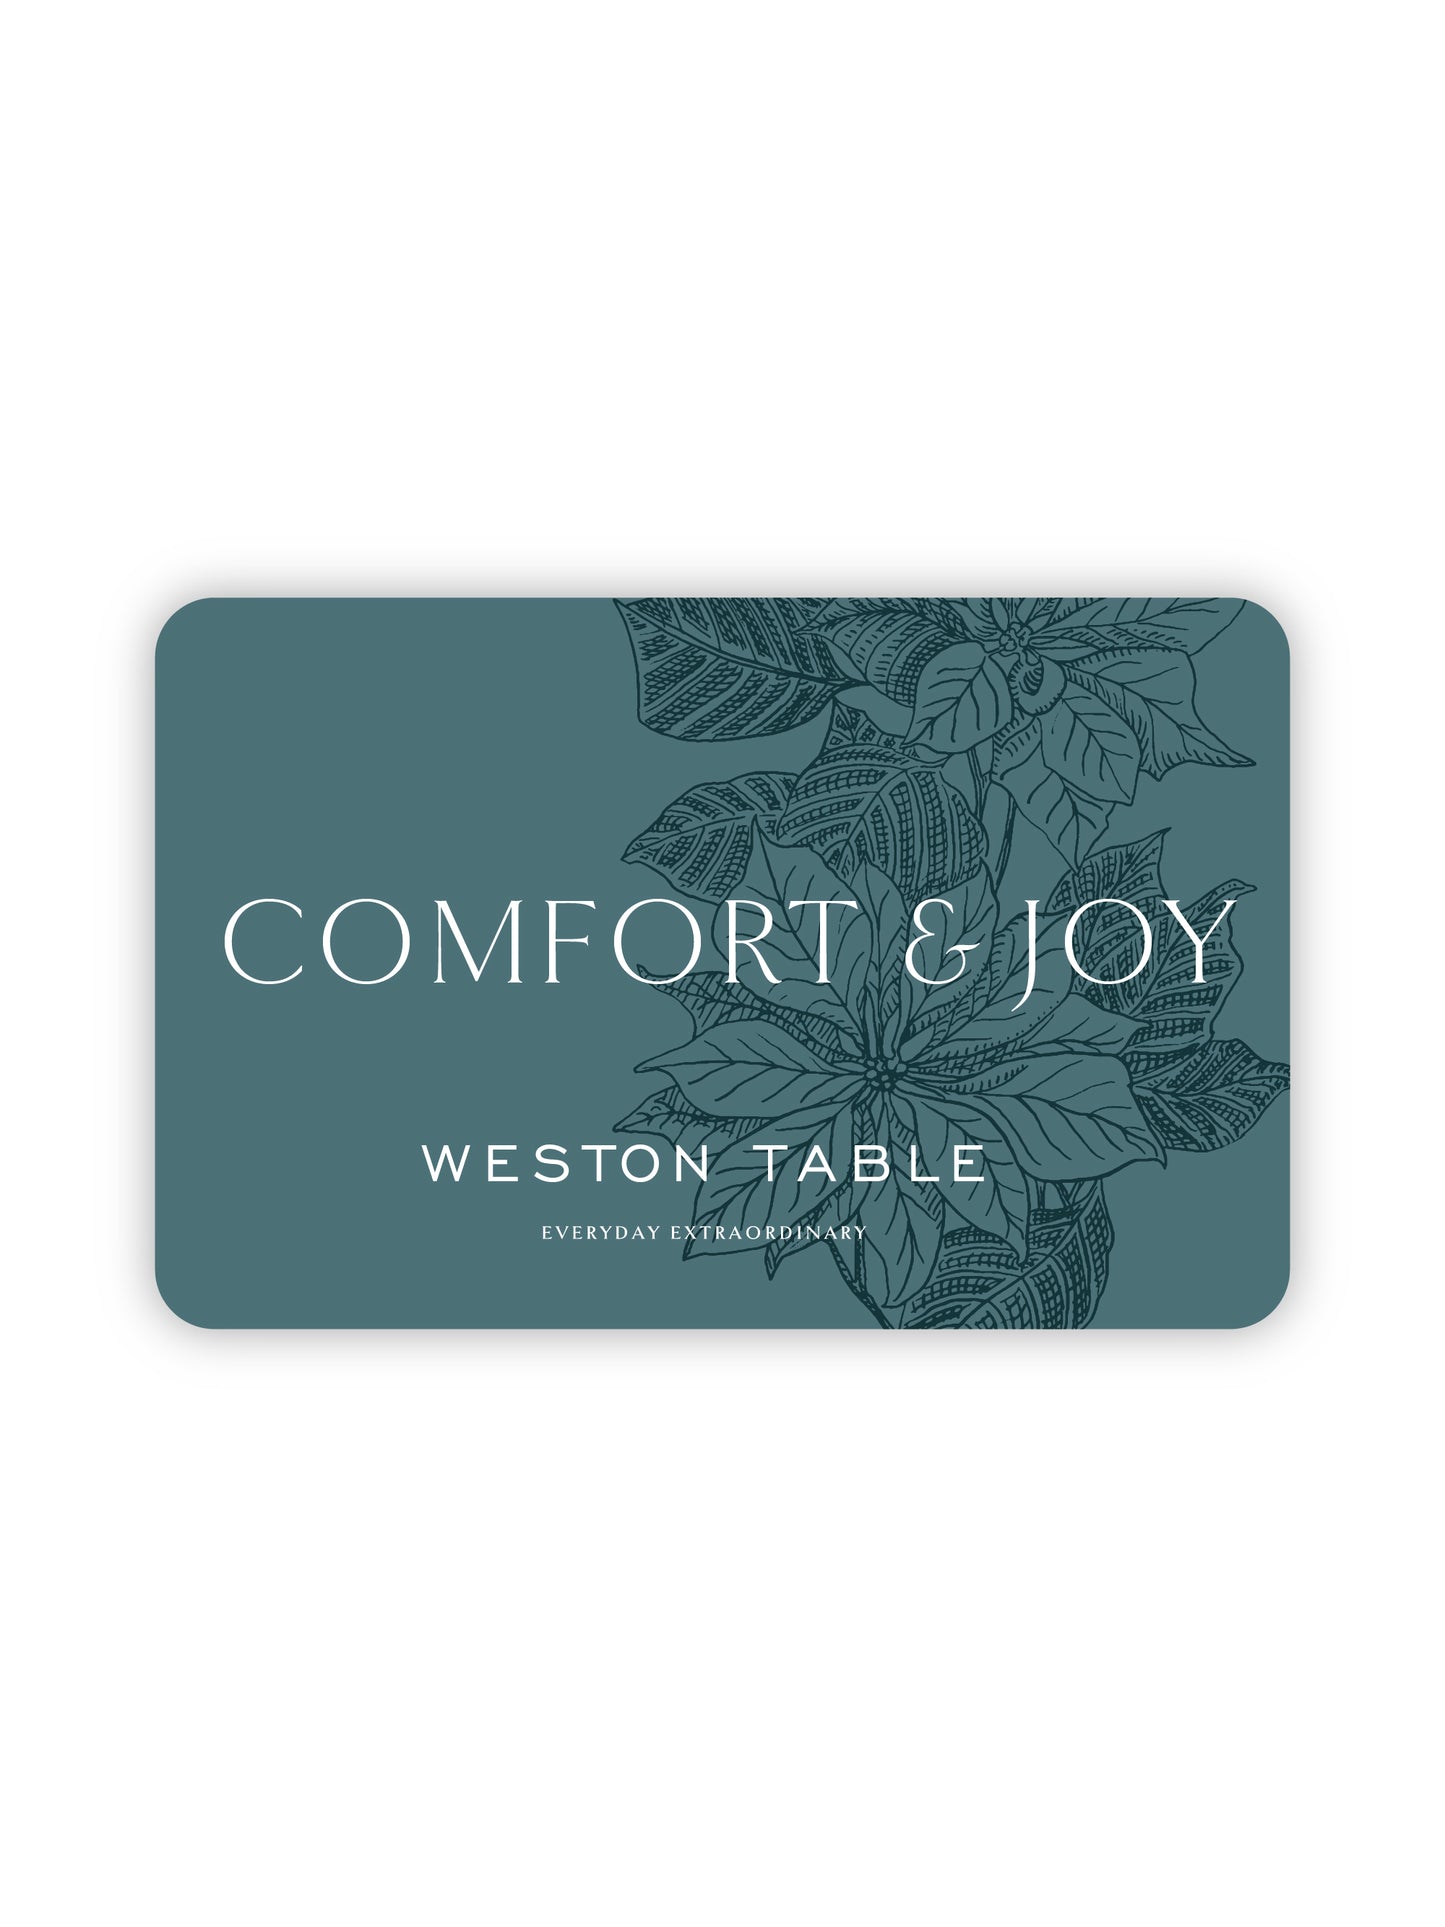 Weston Table Comfort & Joy Gift Card